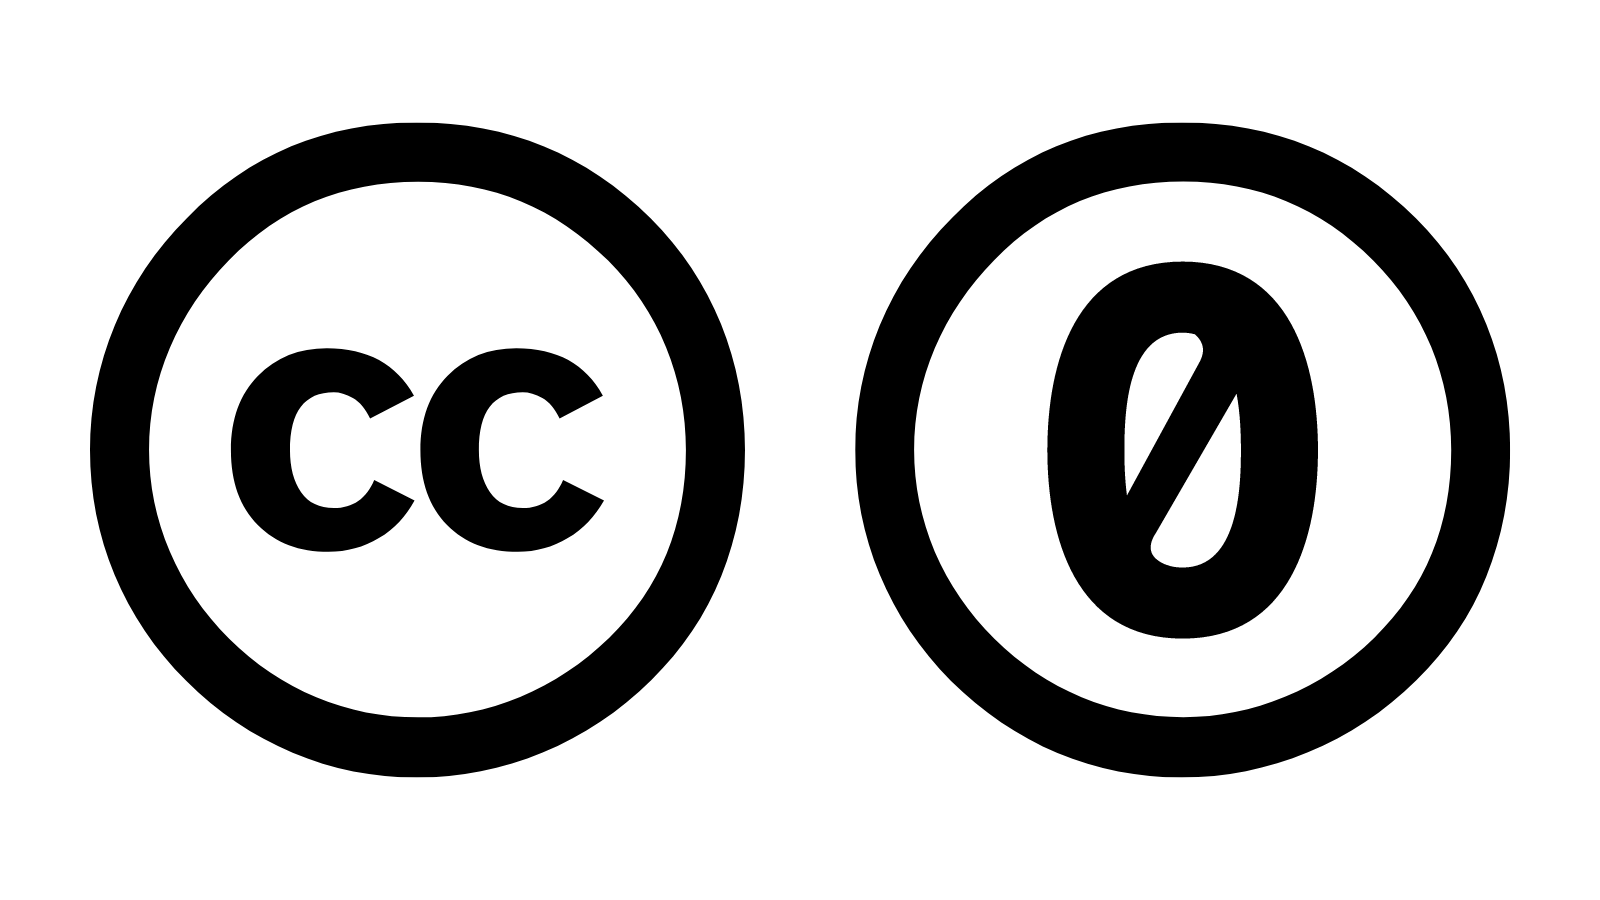 Creative commons attribution 4.0